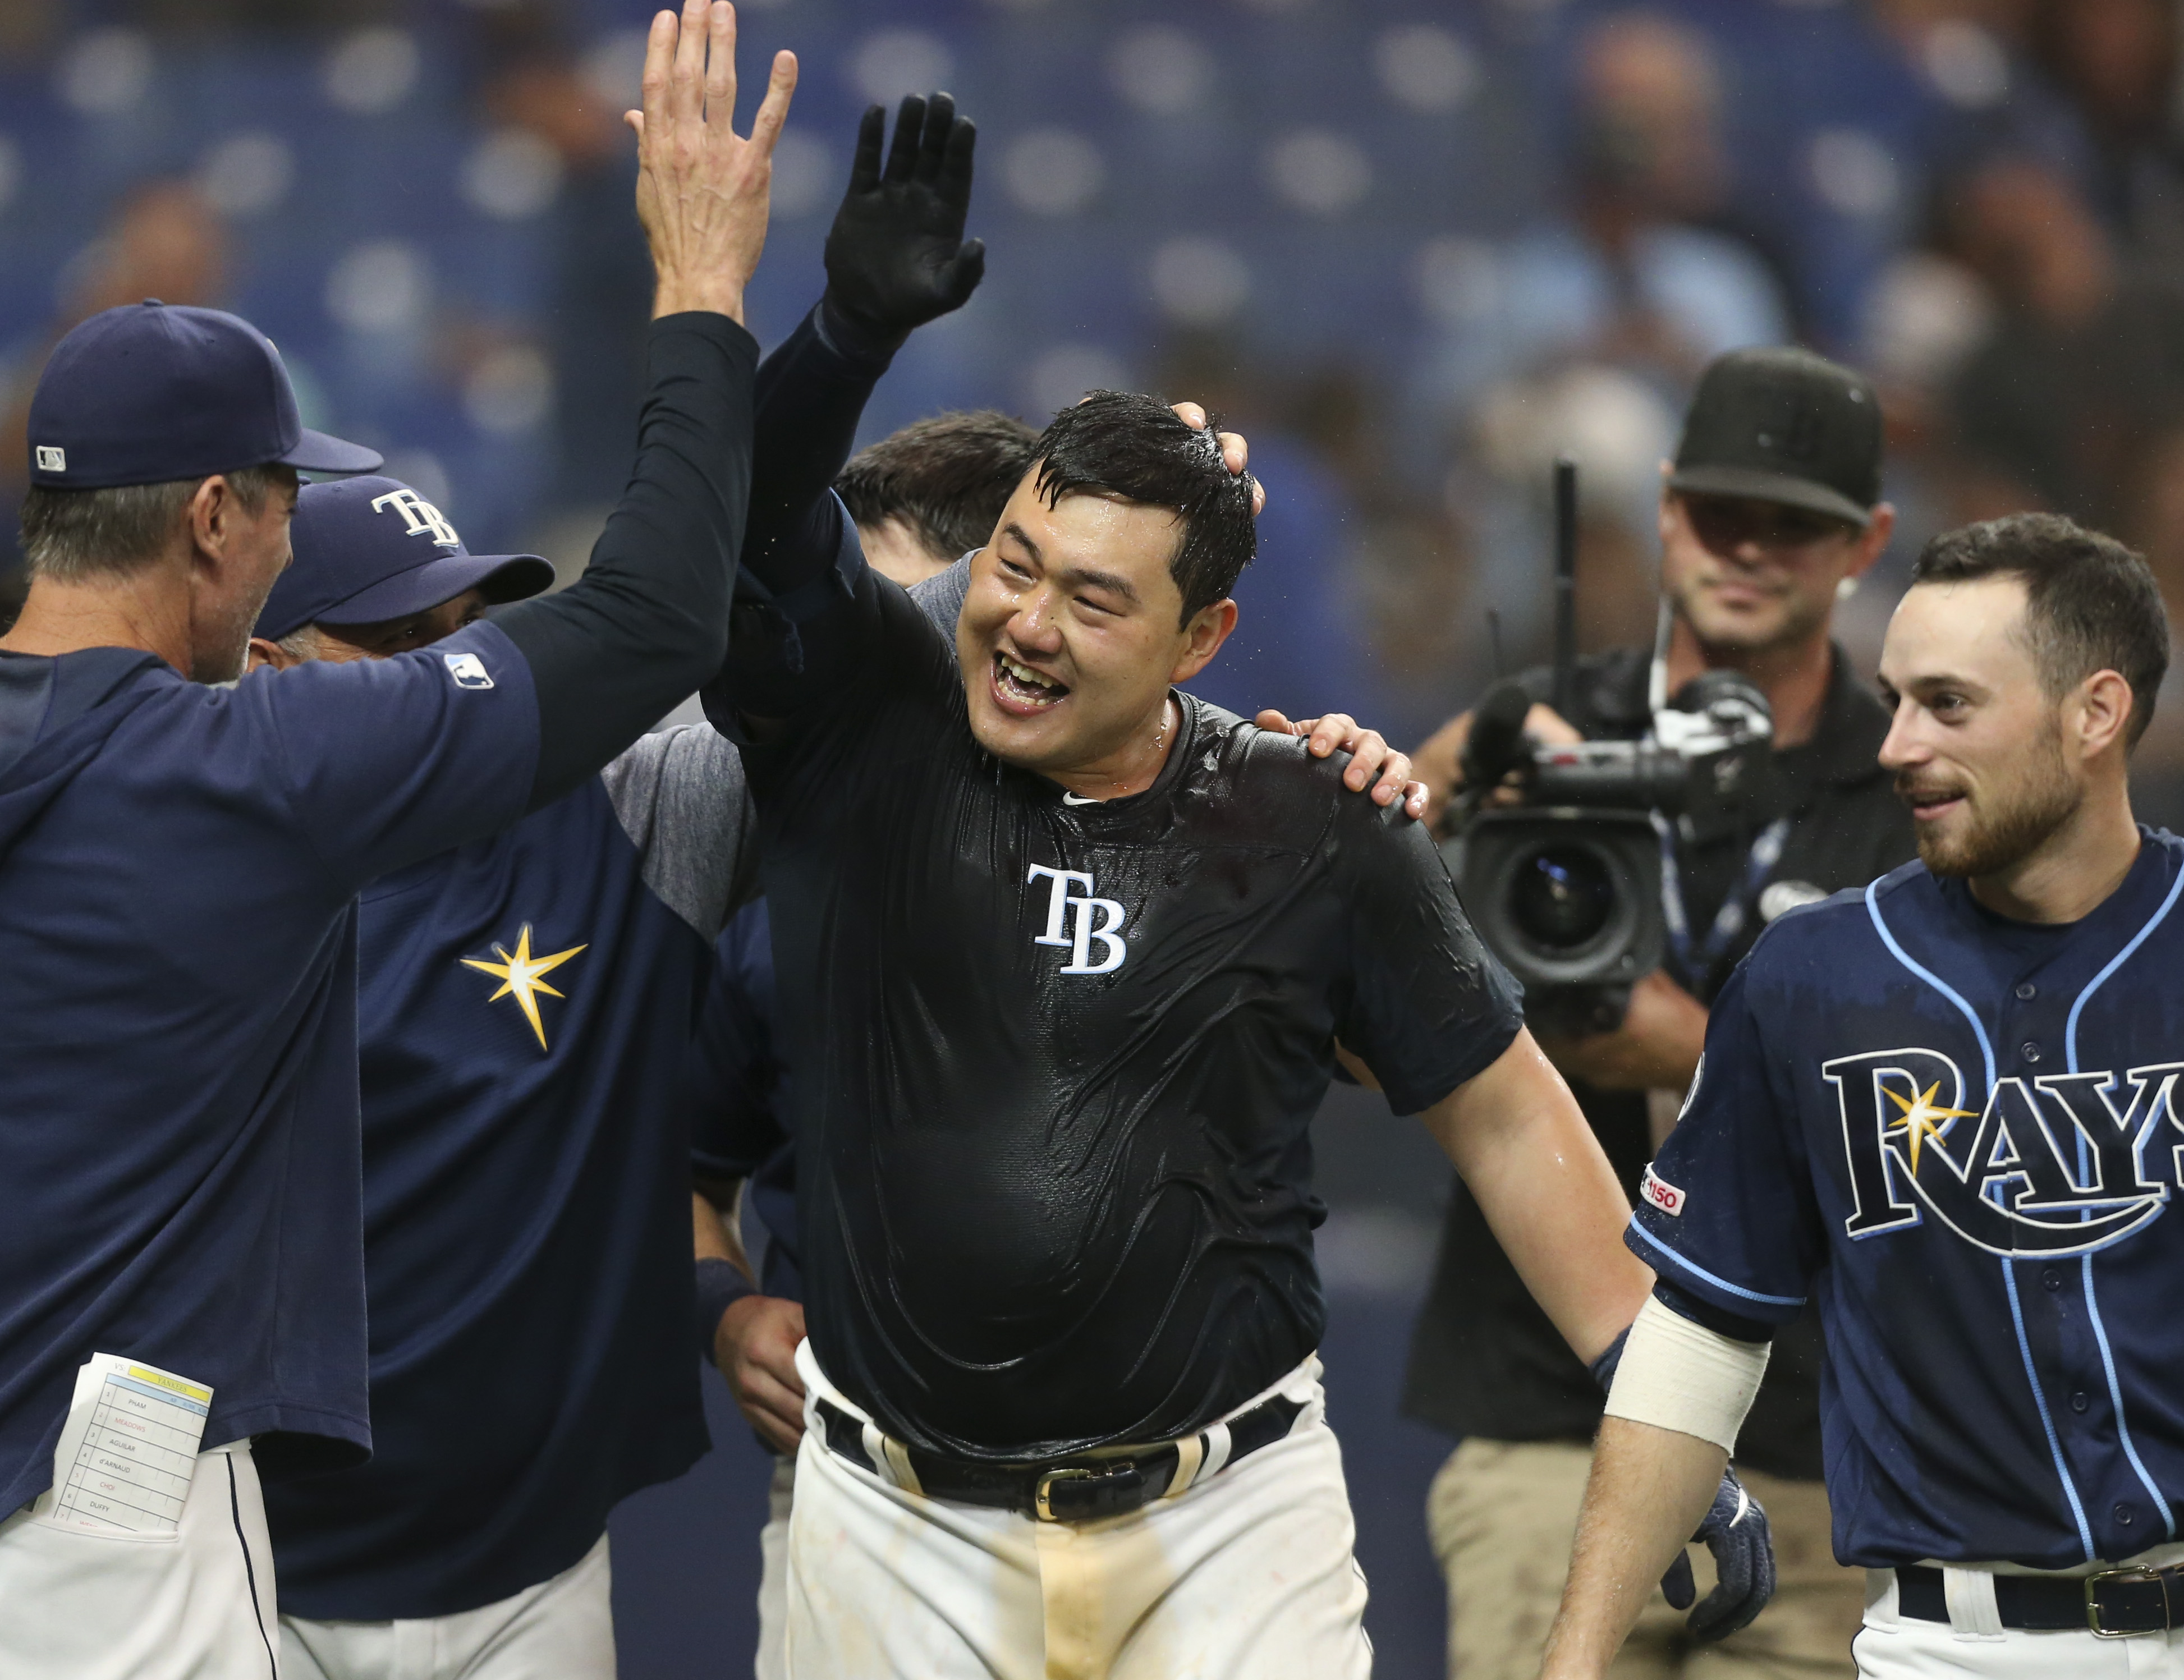 MLB playoffs: Ji-Man Choi trolls Yankees, Astros in crazy scene